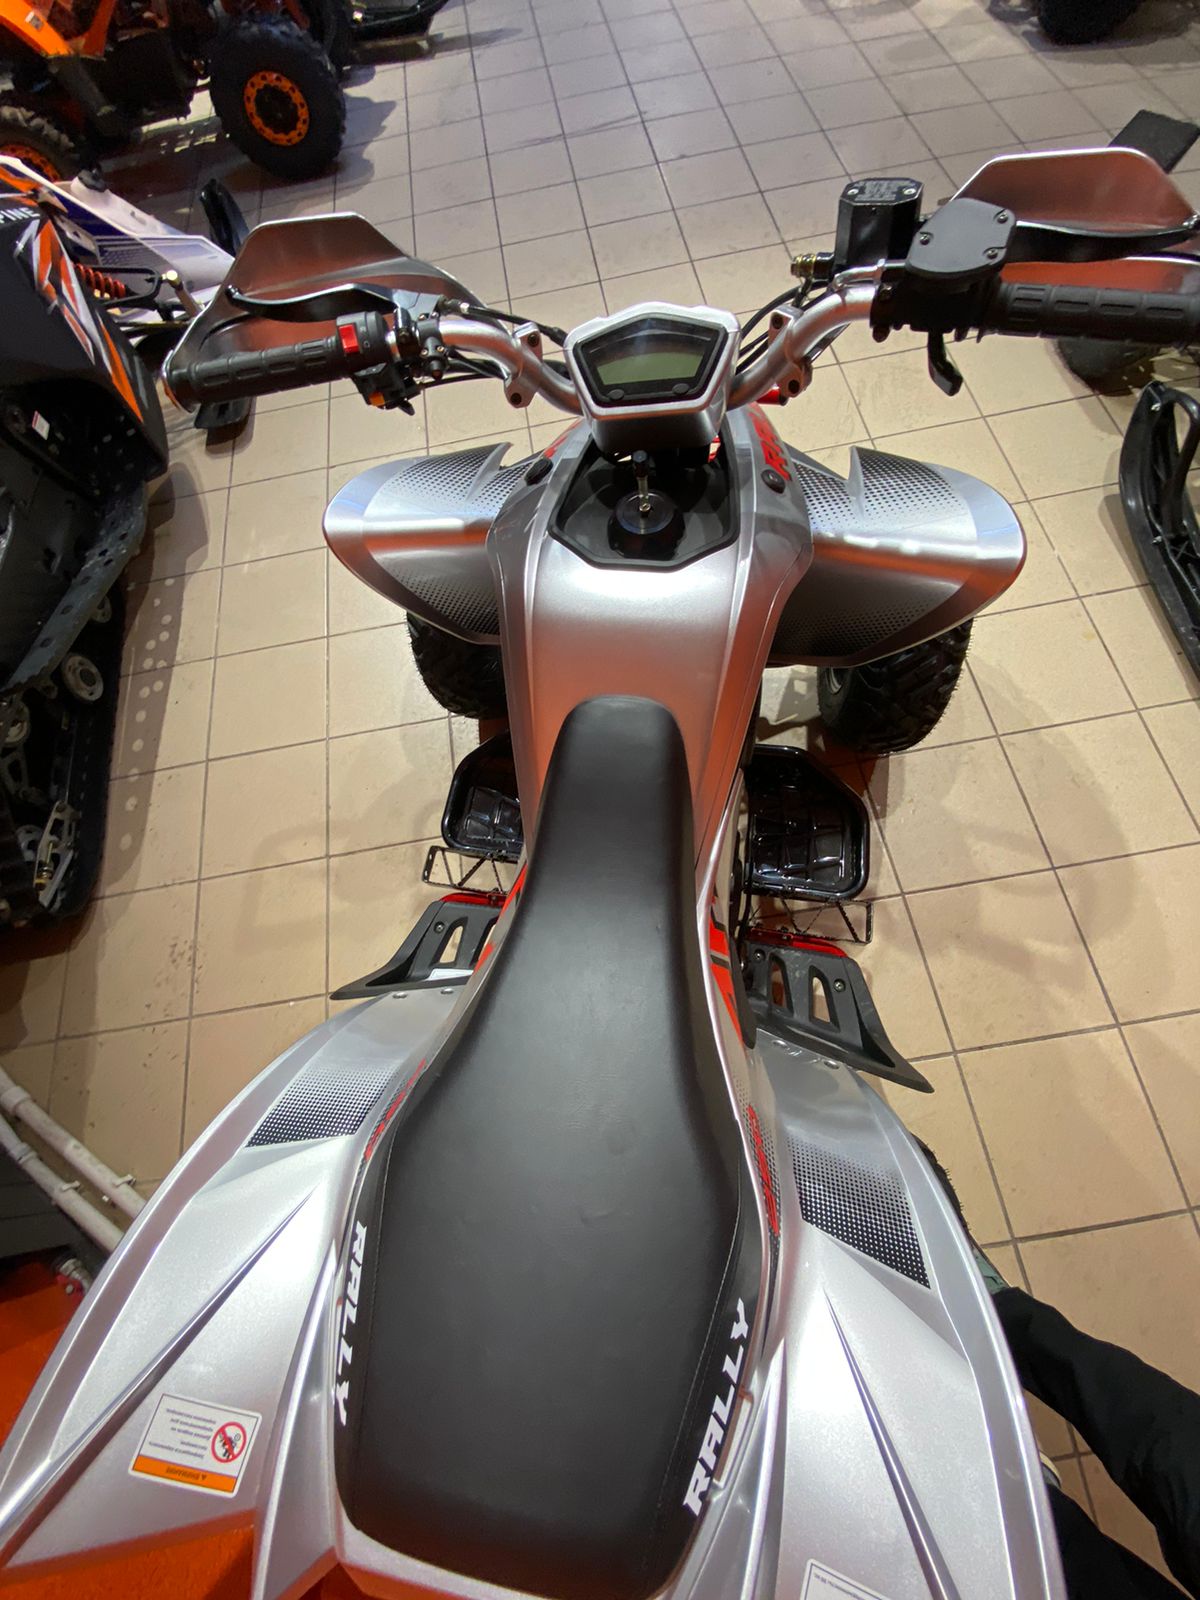 картинка Квадроцикл Motoland 250 RALLY | Moped24